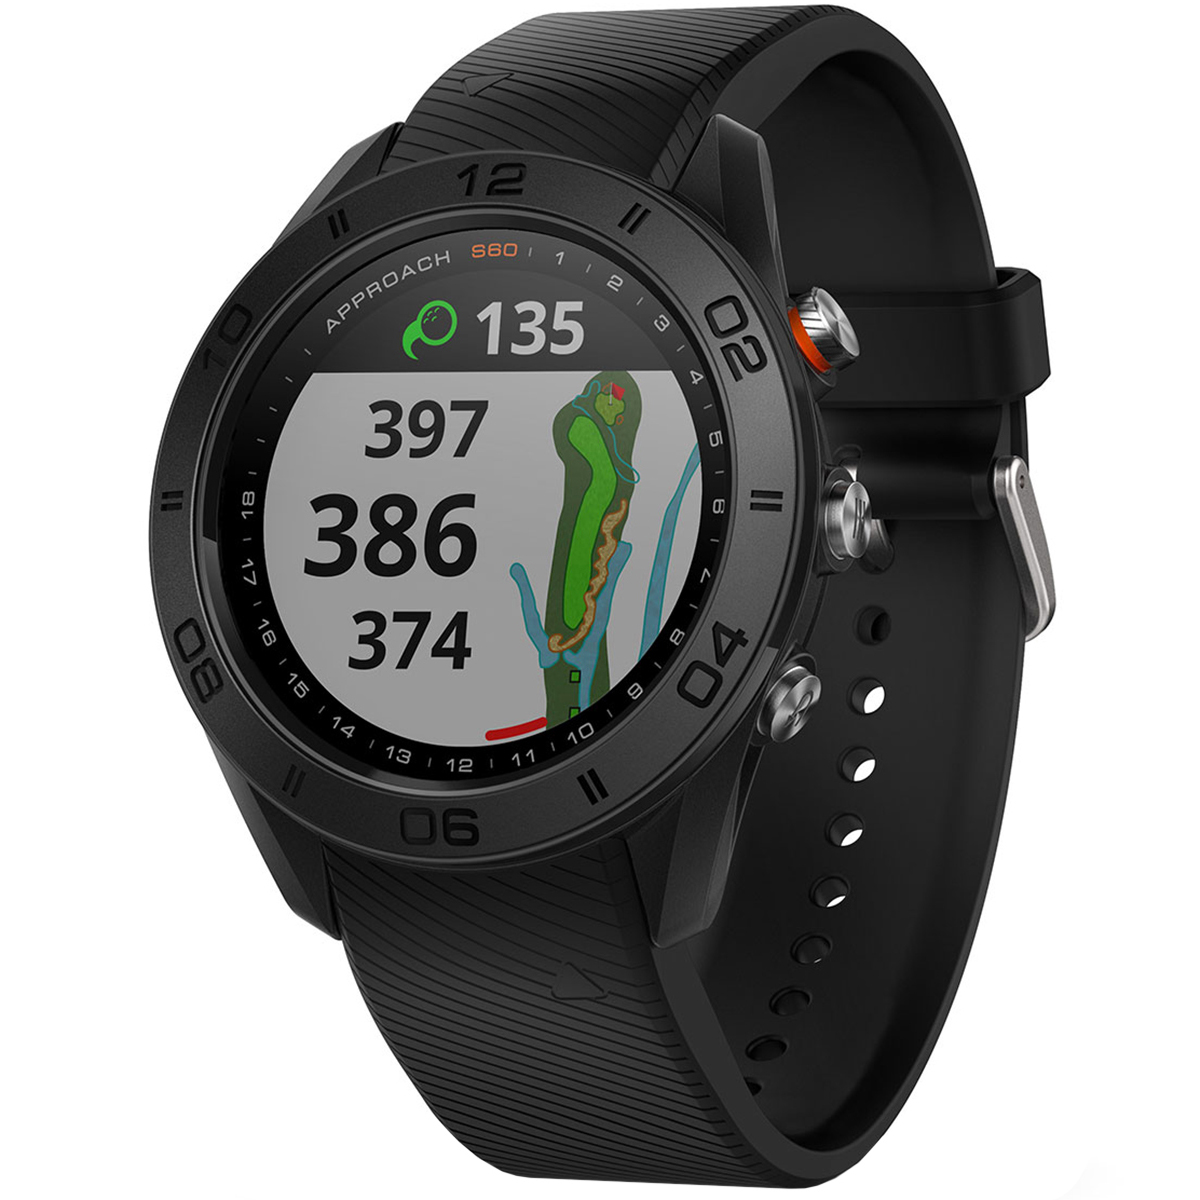 Garmin Approach S60 GPS Watch from american golf